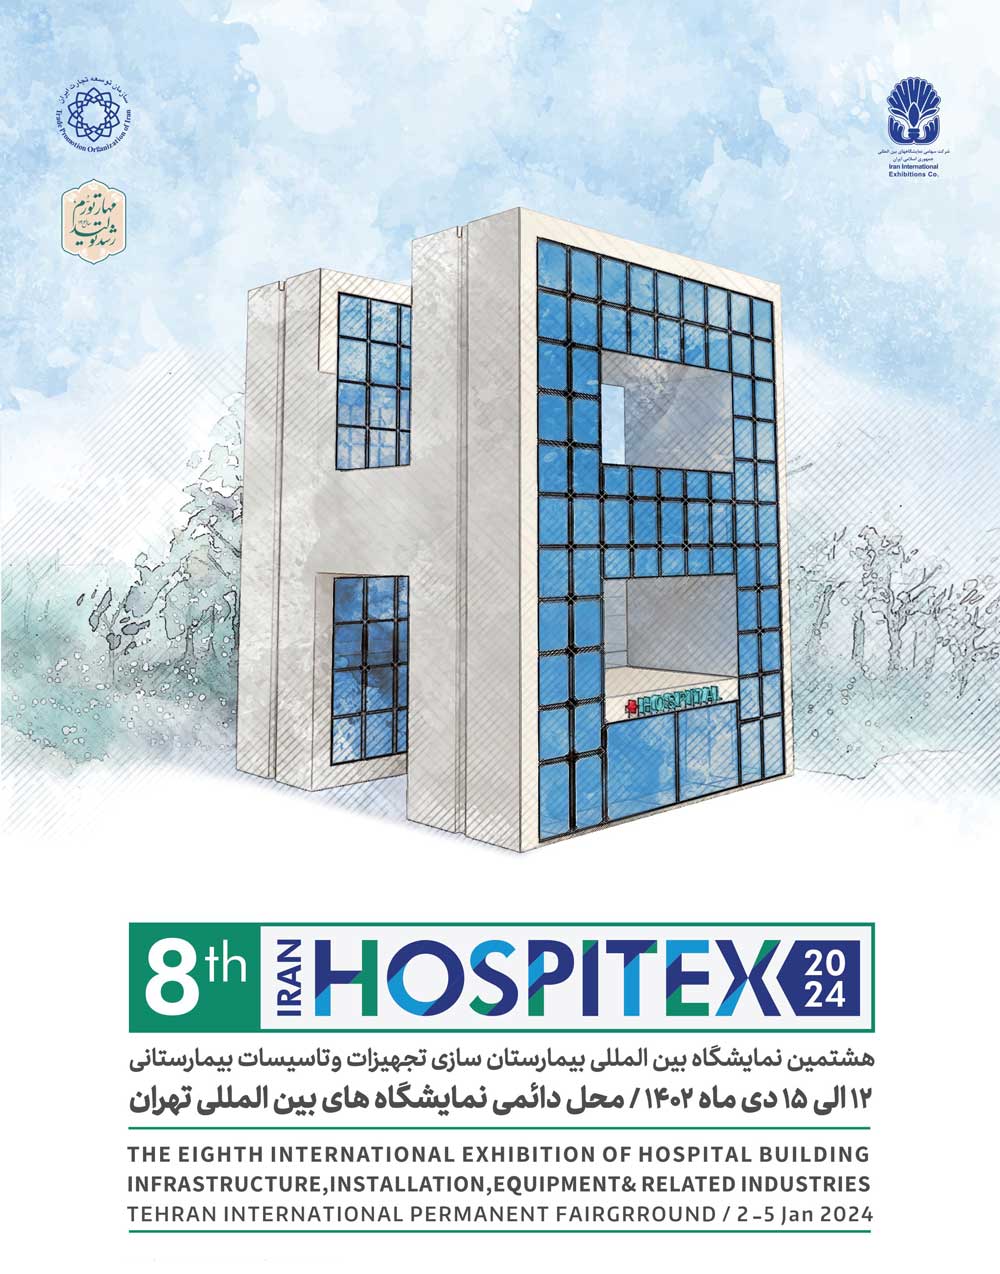 hospitex 2024 Poster - The 8th International Hospitex Exhibition 2024 in Iran/Tehran